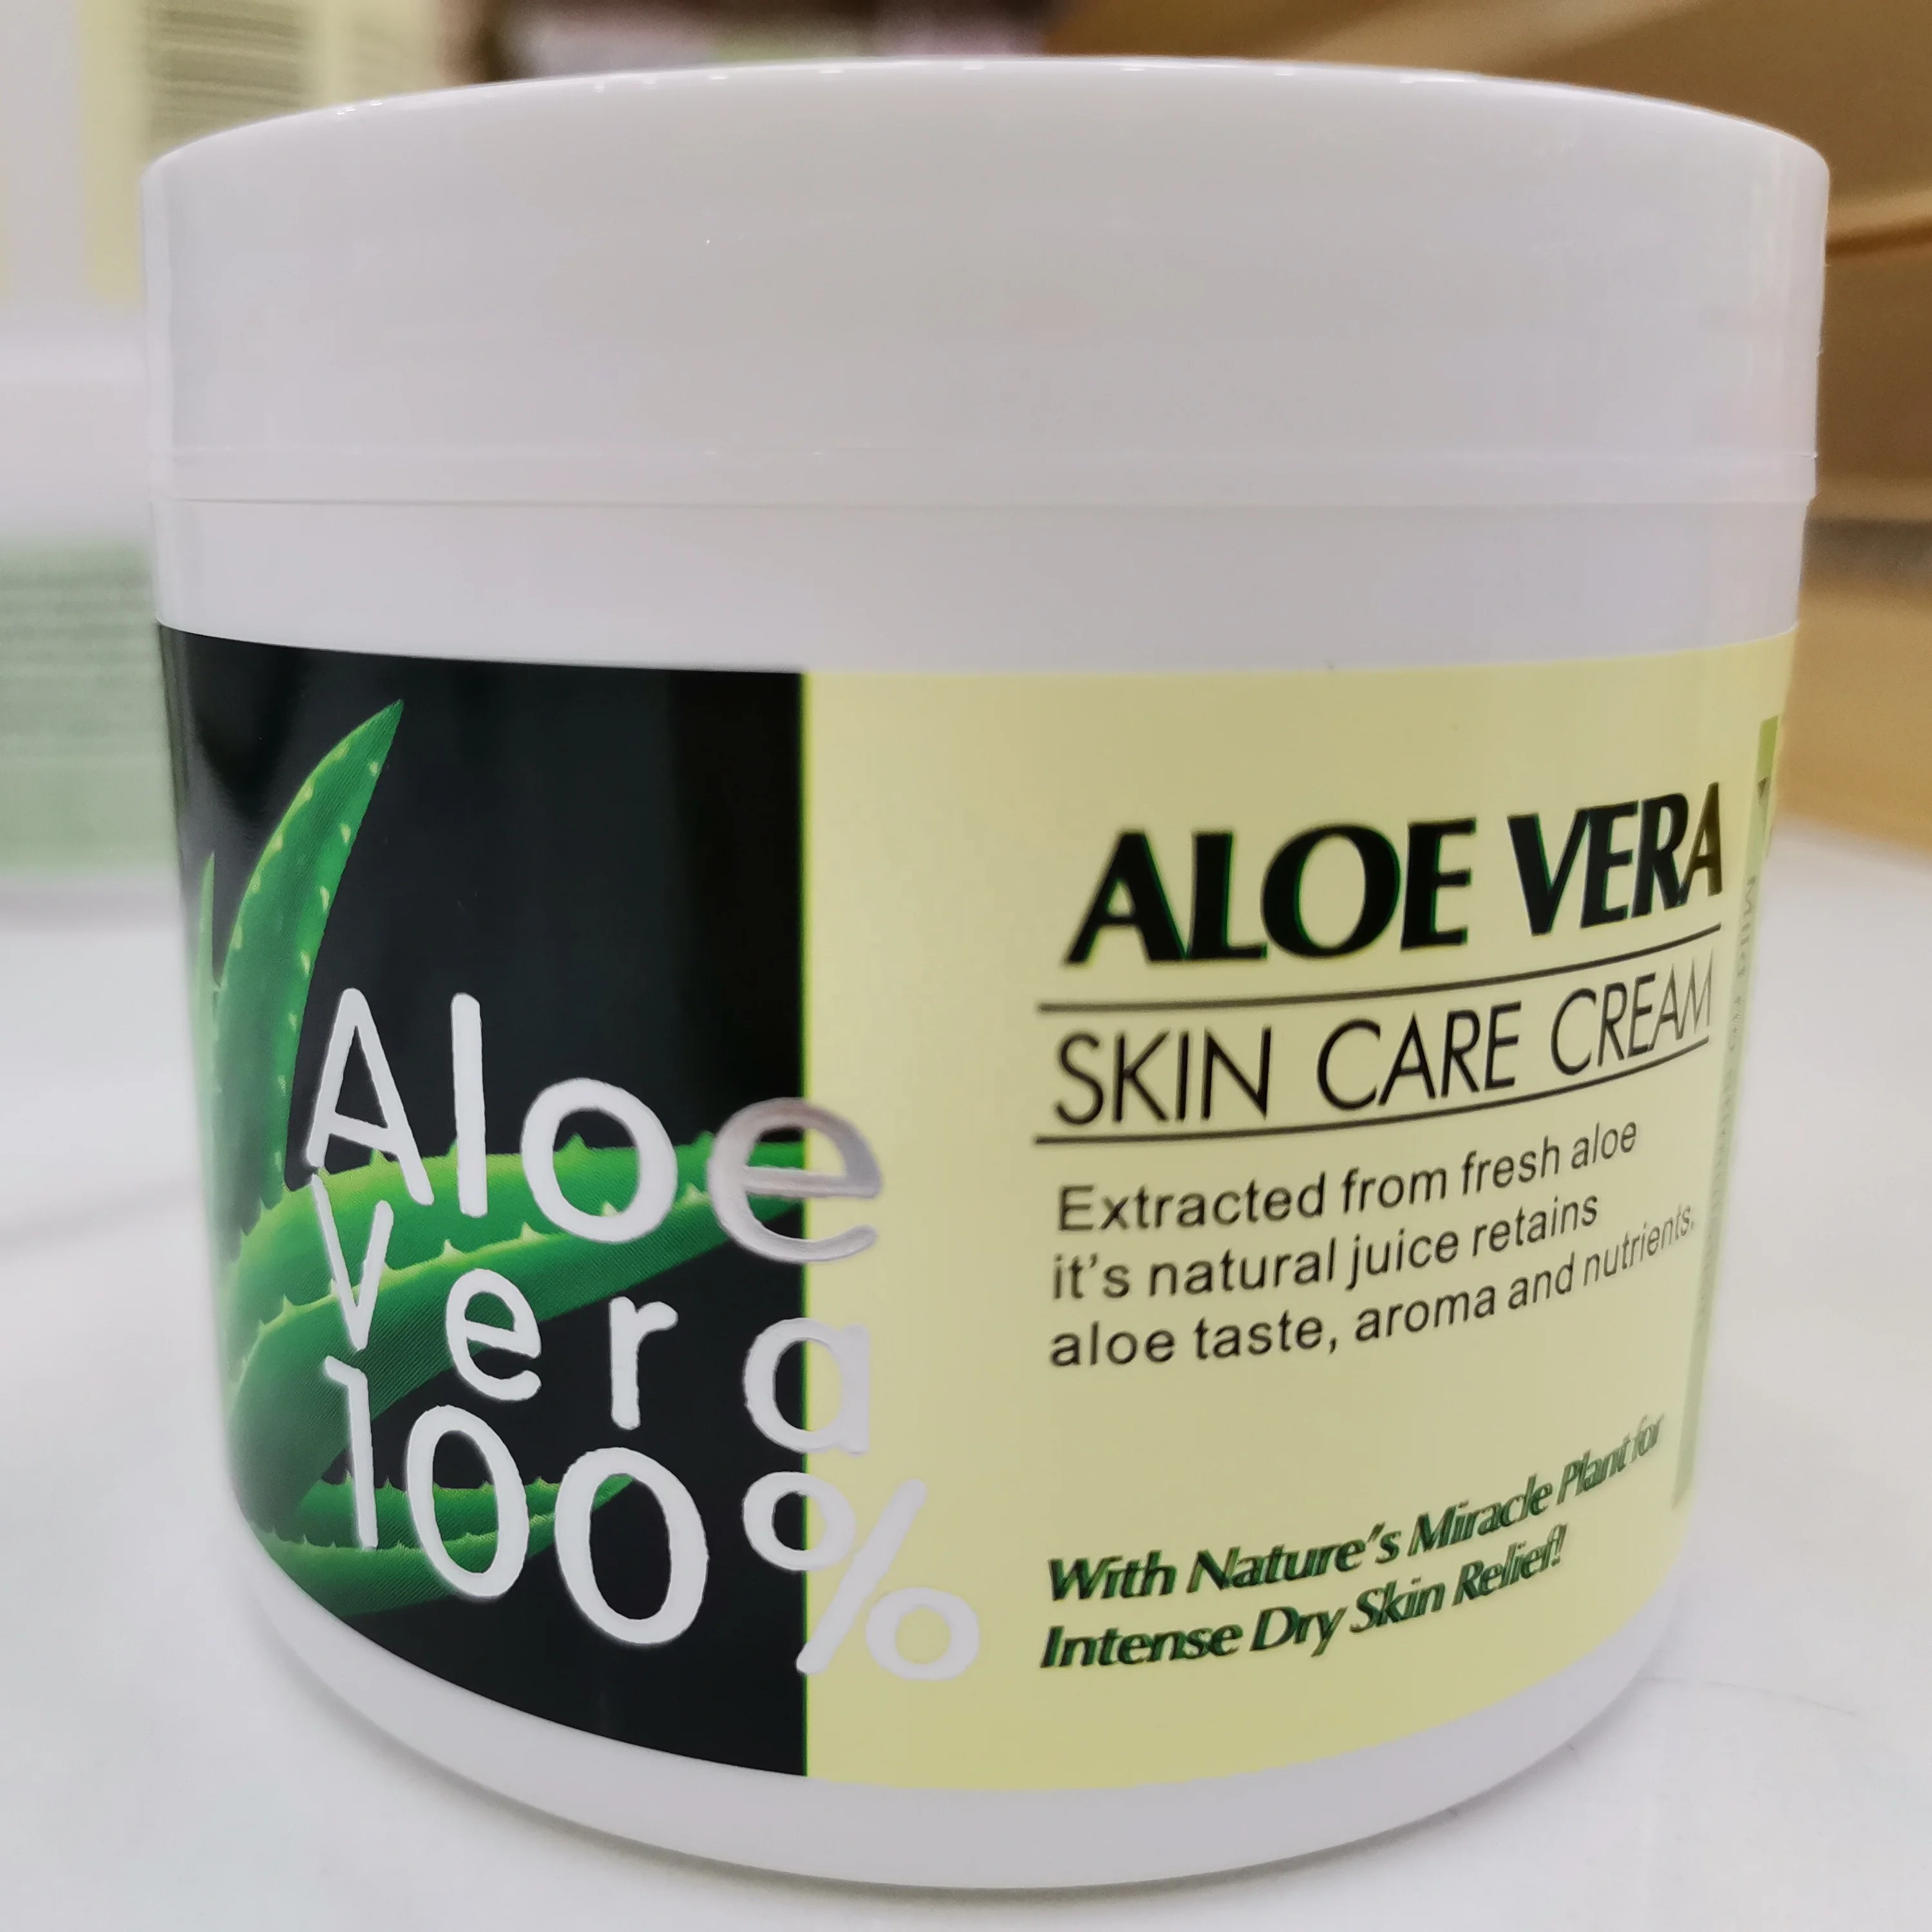 

Best Seller Wokali Pure Natural 115G Aloe Vera Skin Care Cream- For Intense Dry Skin Relief, Moisturizing